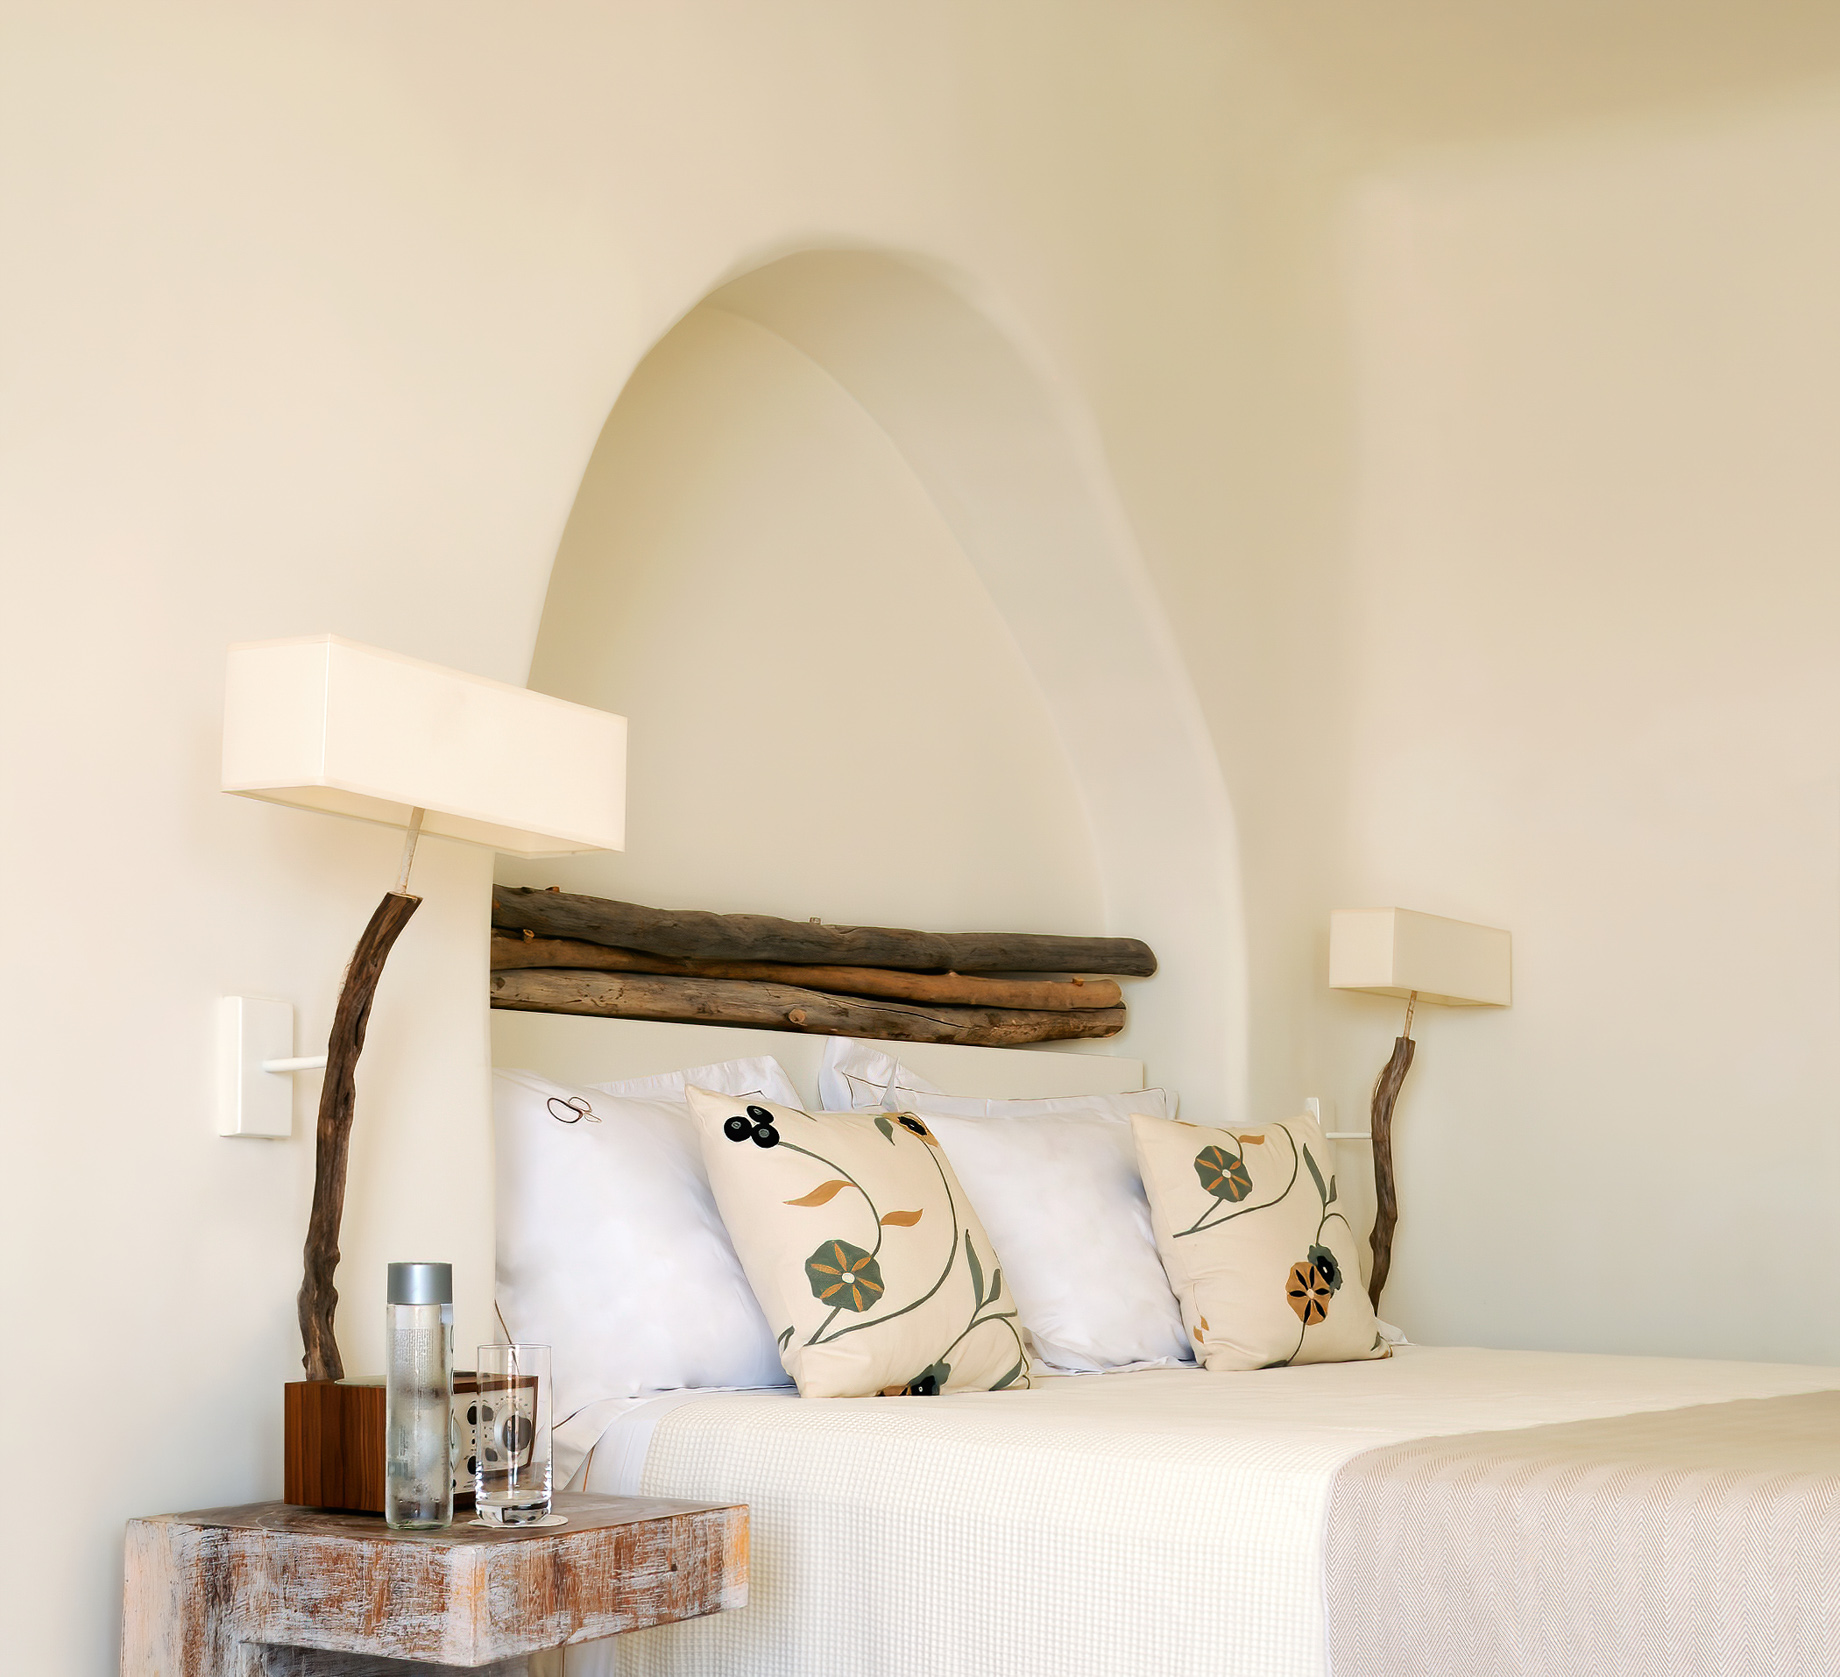 Mystique Hotel Santorini – Oia, Santorini Island, Greece – Bedroom